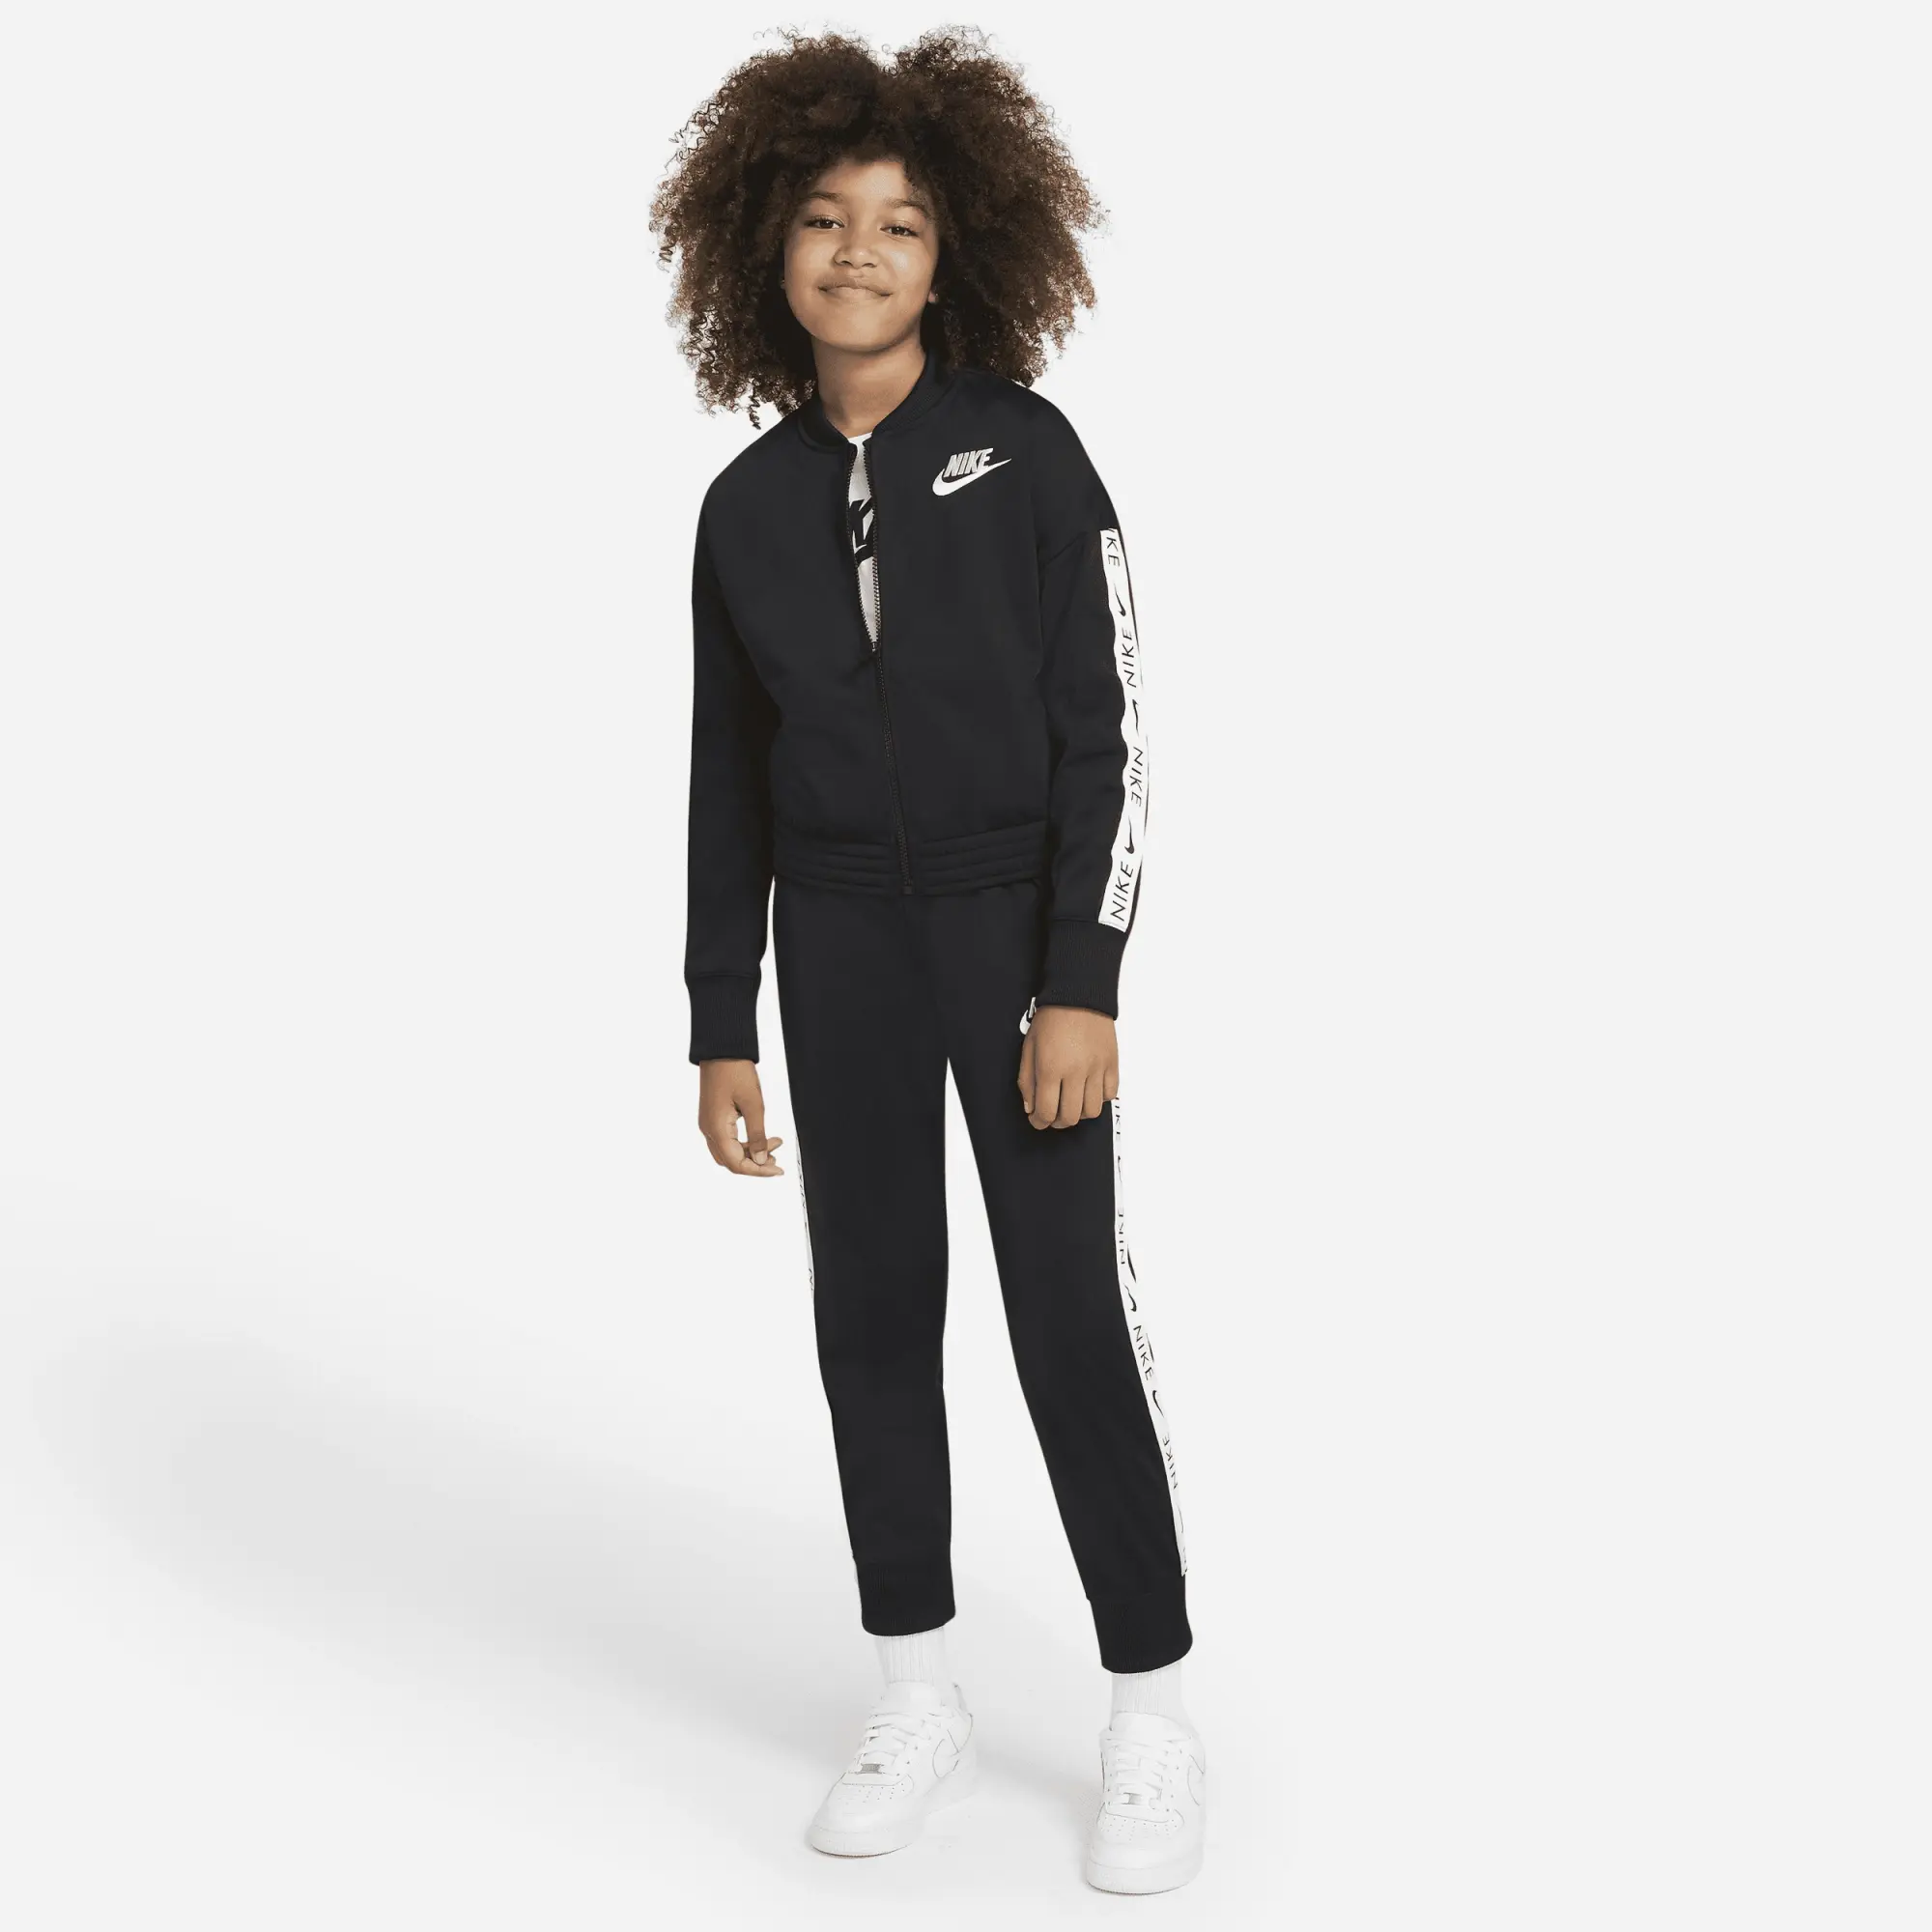 Nike Sportswear Tracksuit Girls - Black, White